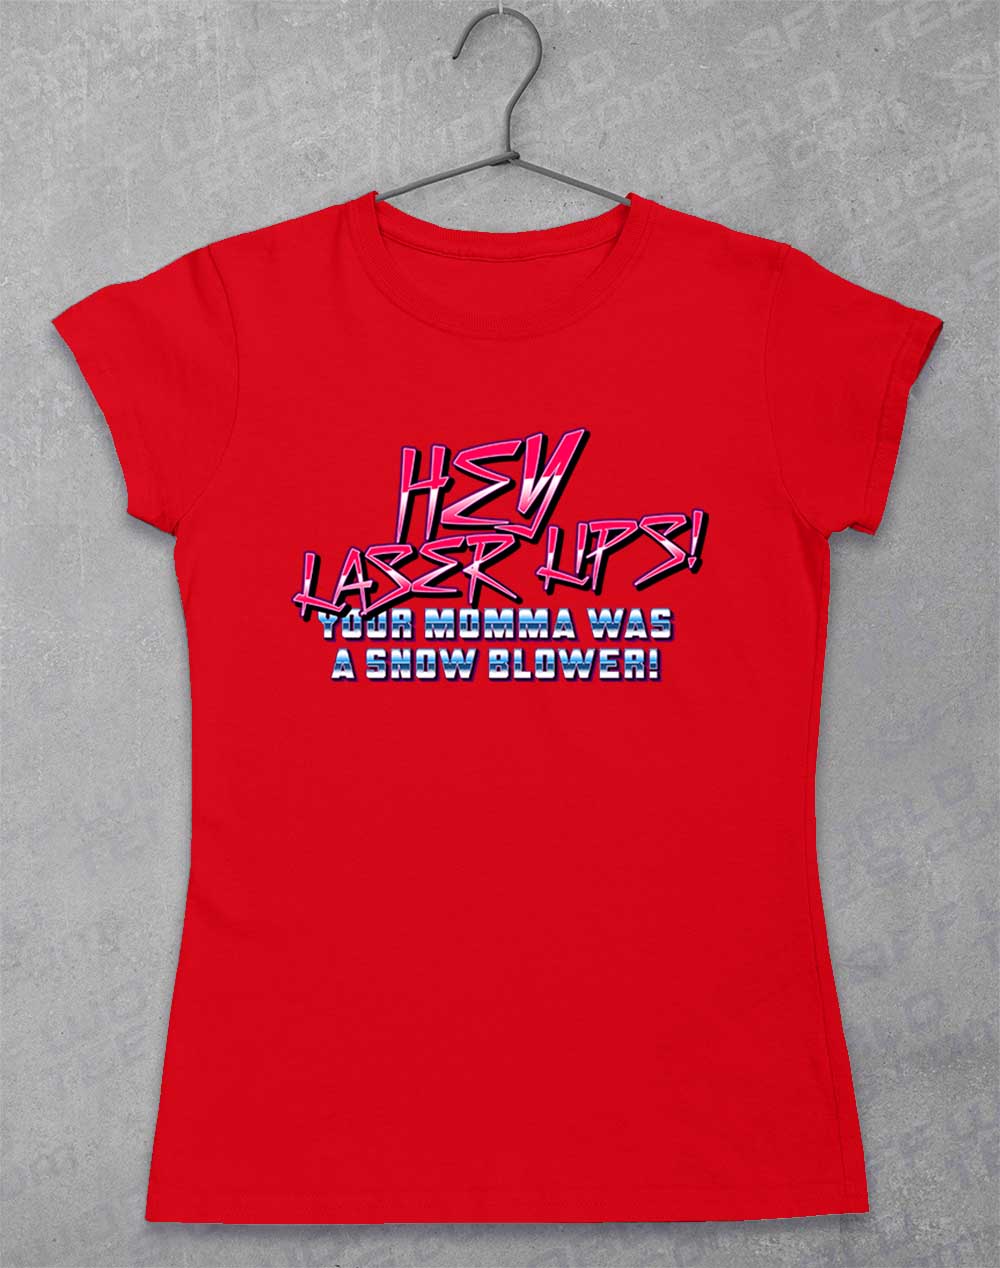 Red - Hey Laser Lips Women's T-Shirt